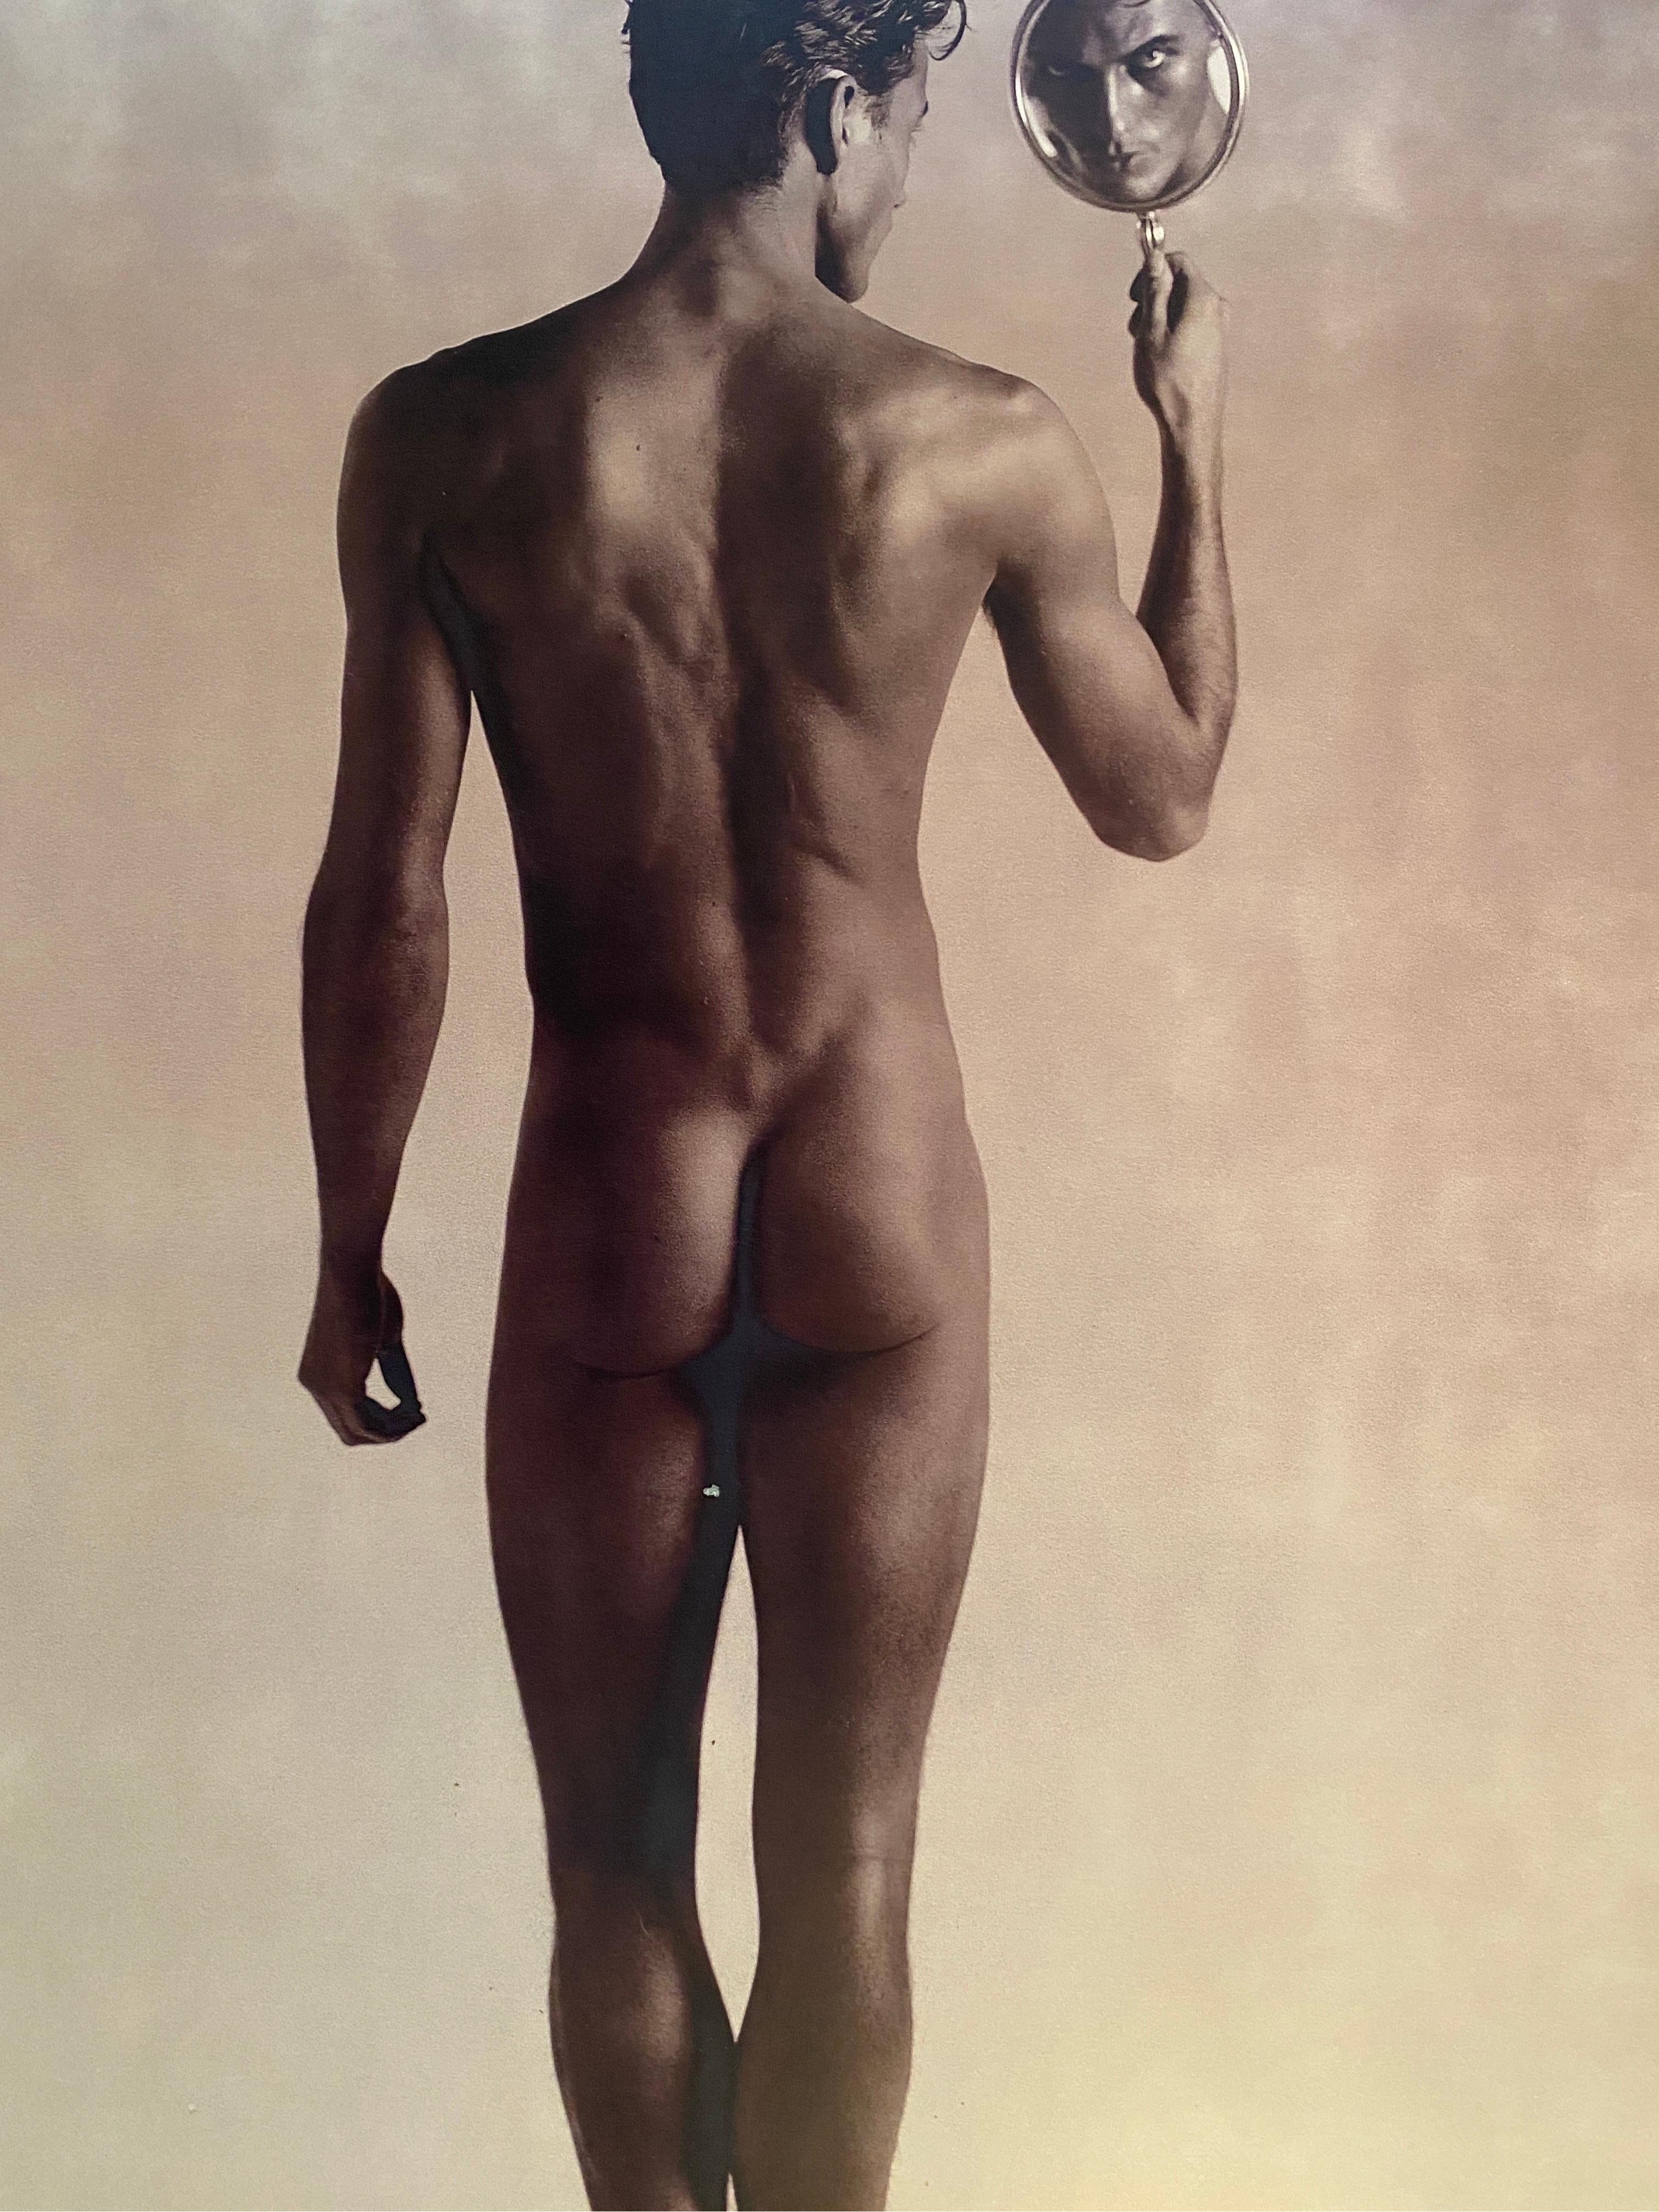 North American Karl Lagerfeld Nude Fashion Photograph Litho, #3818/5000 Alex Lundqvist, 1997